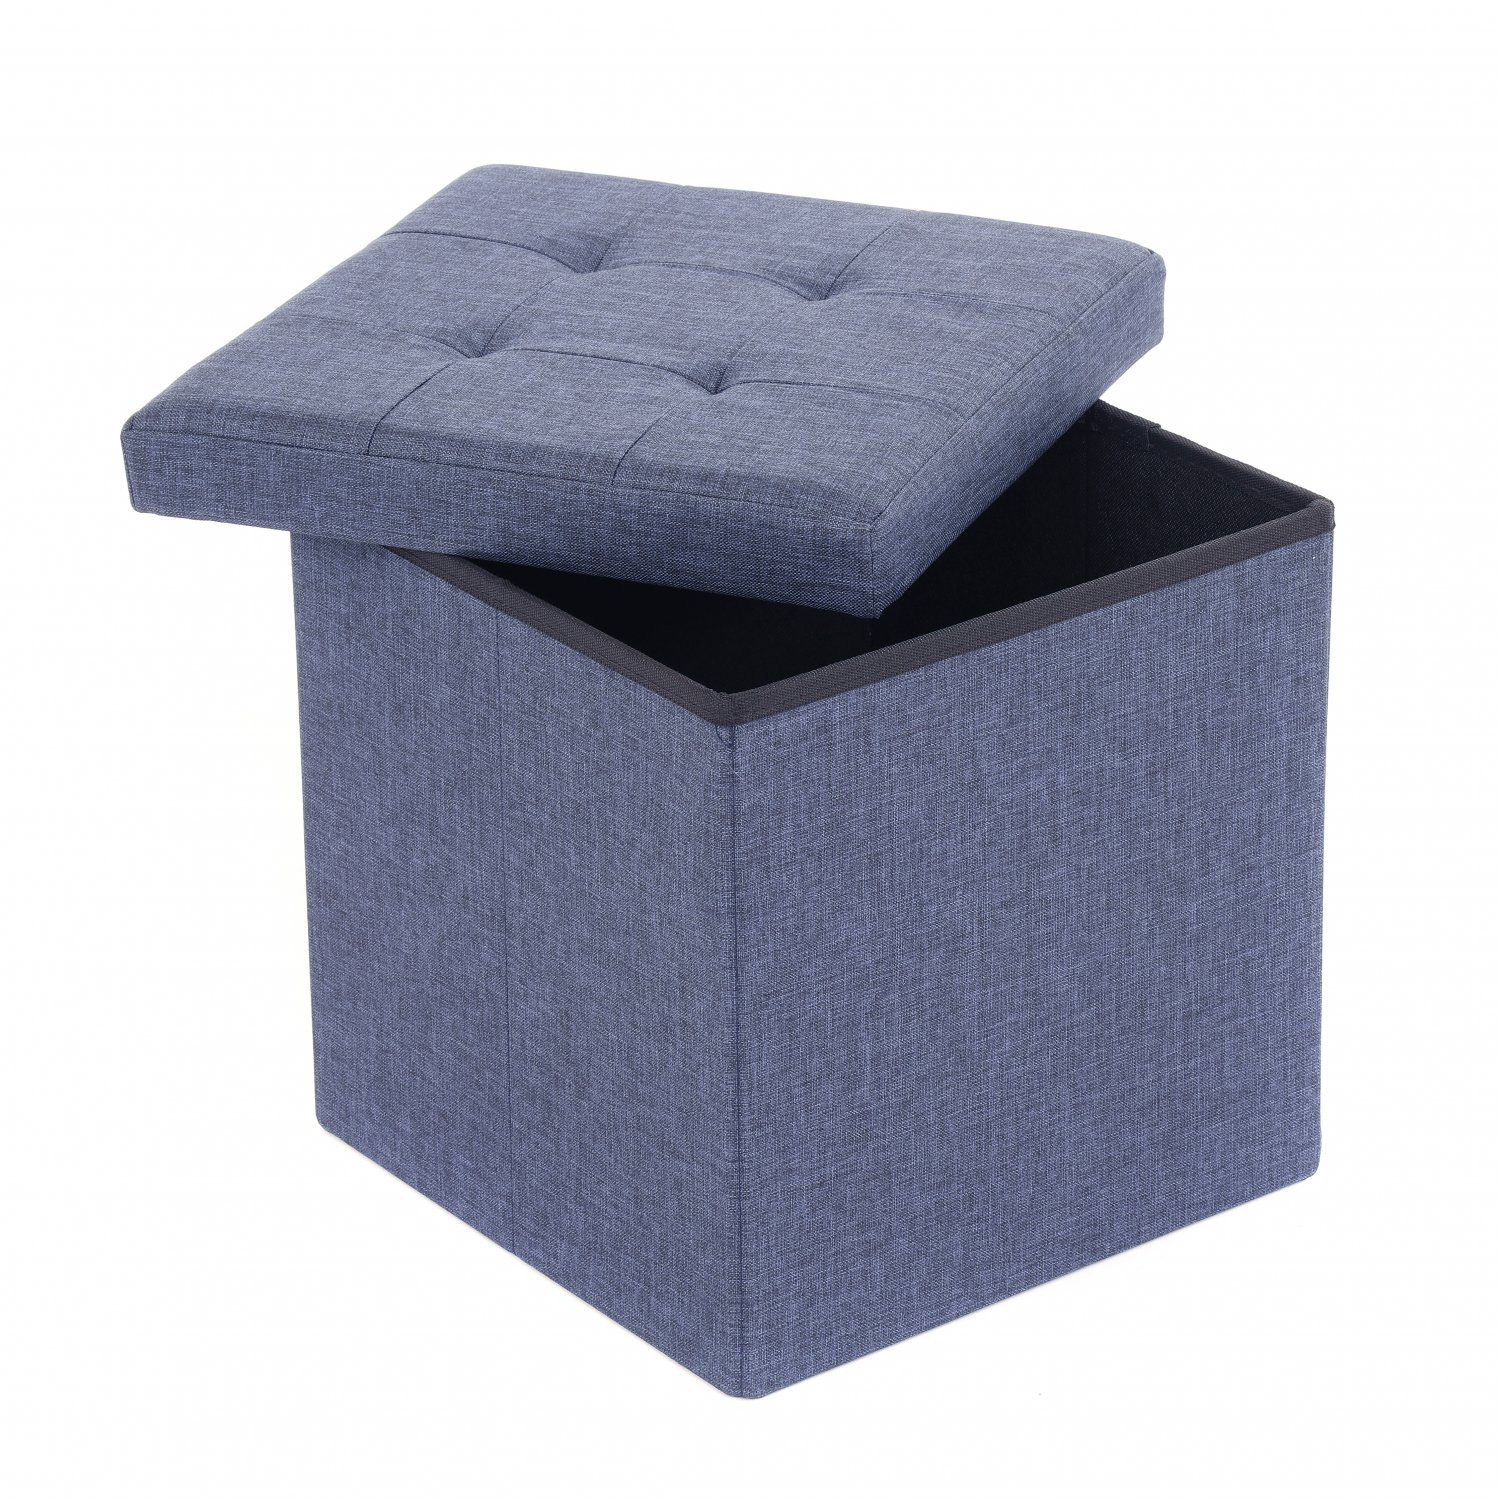 Small Blue Linen Folding Ottoman Storage Chest Box Seat Bench